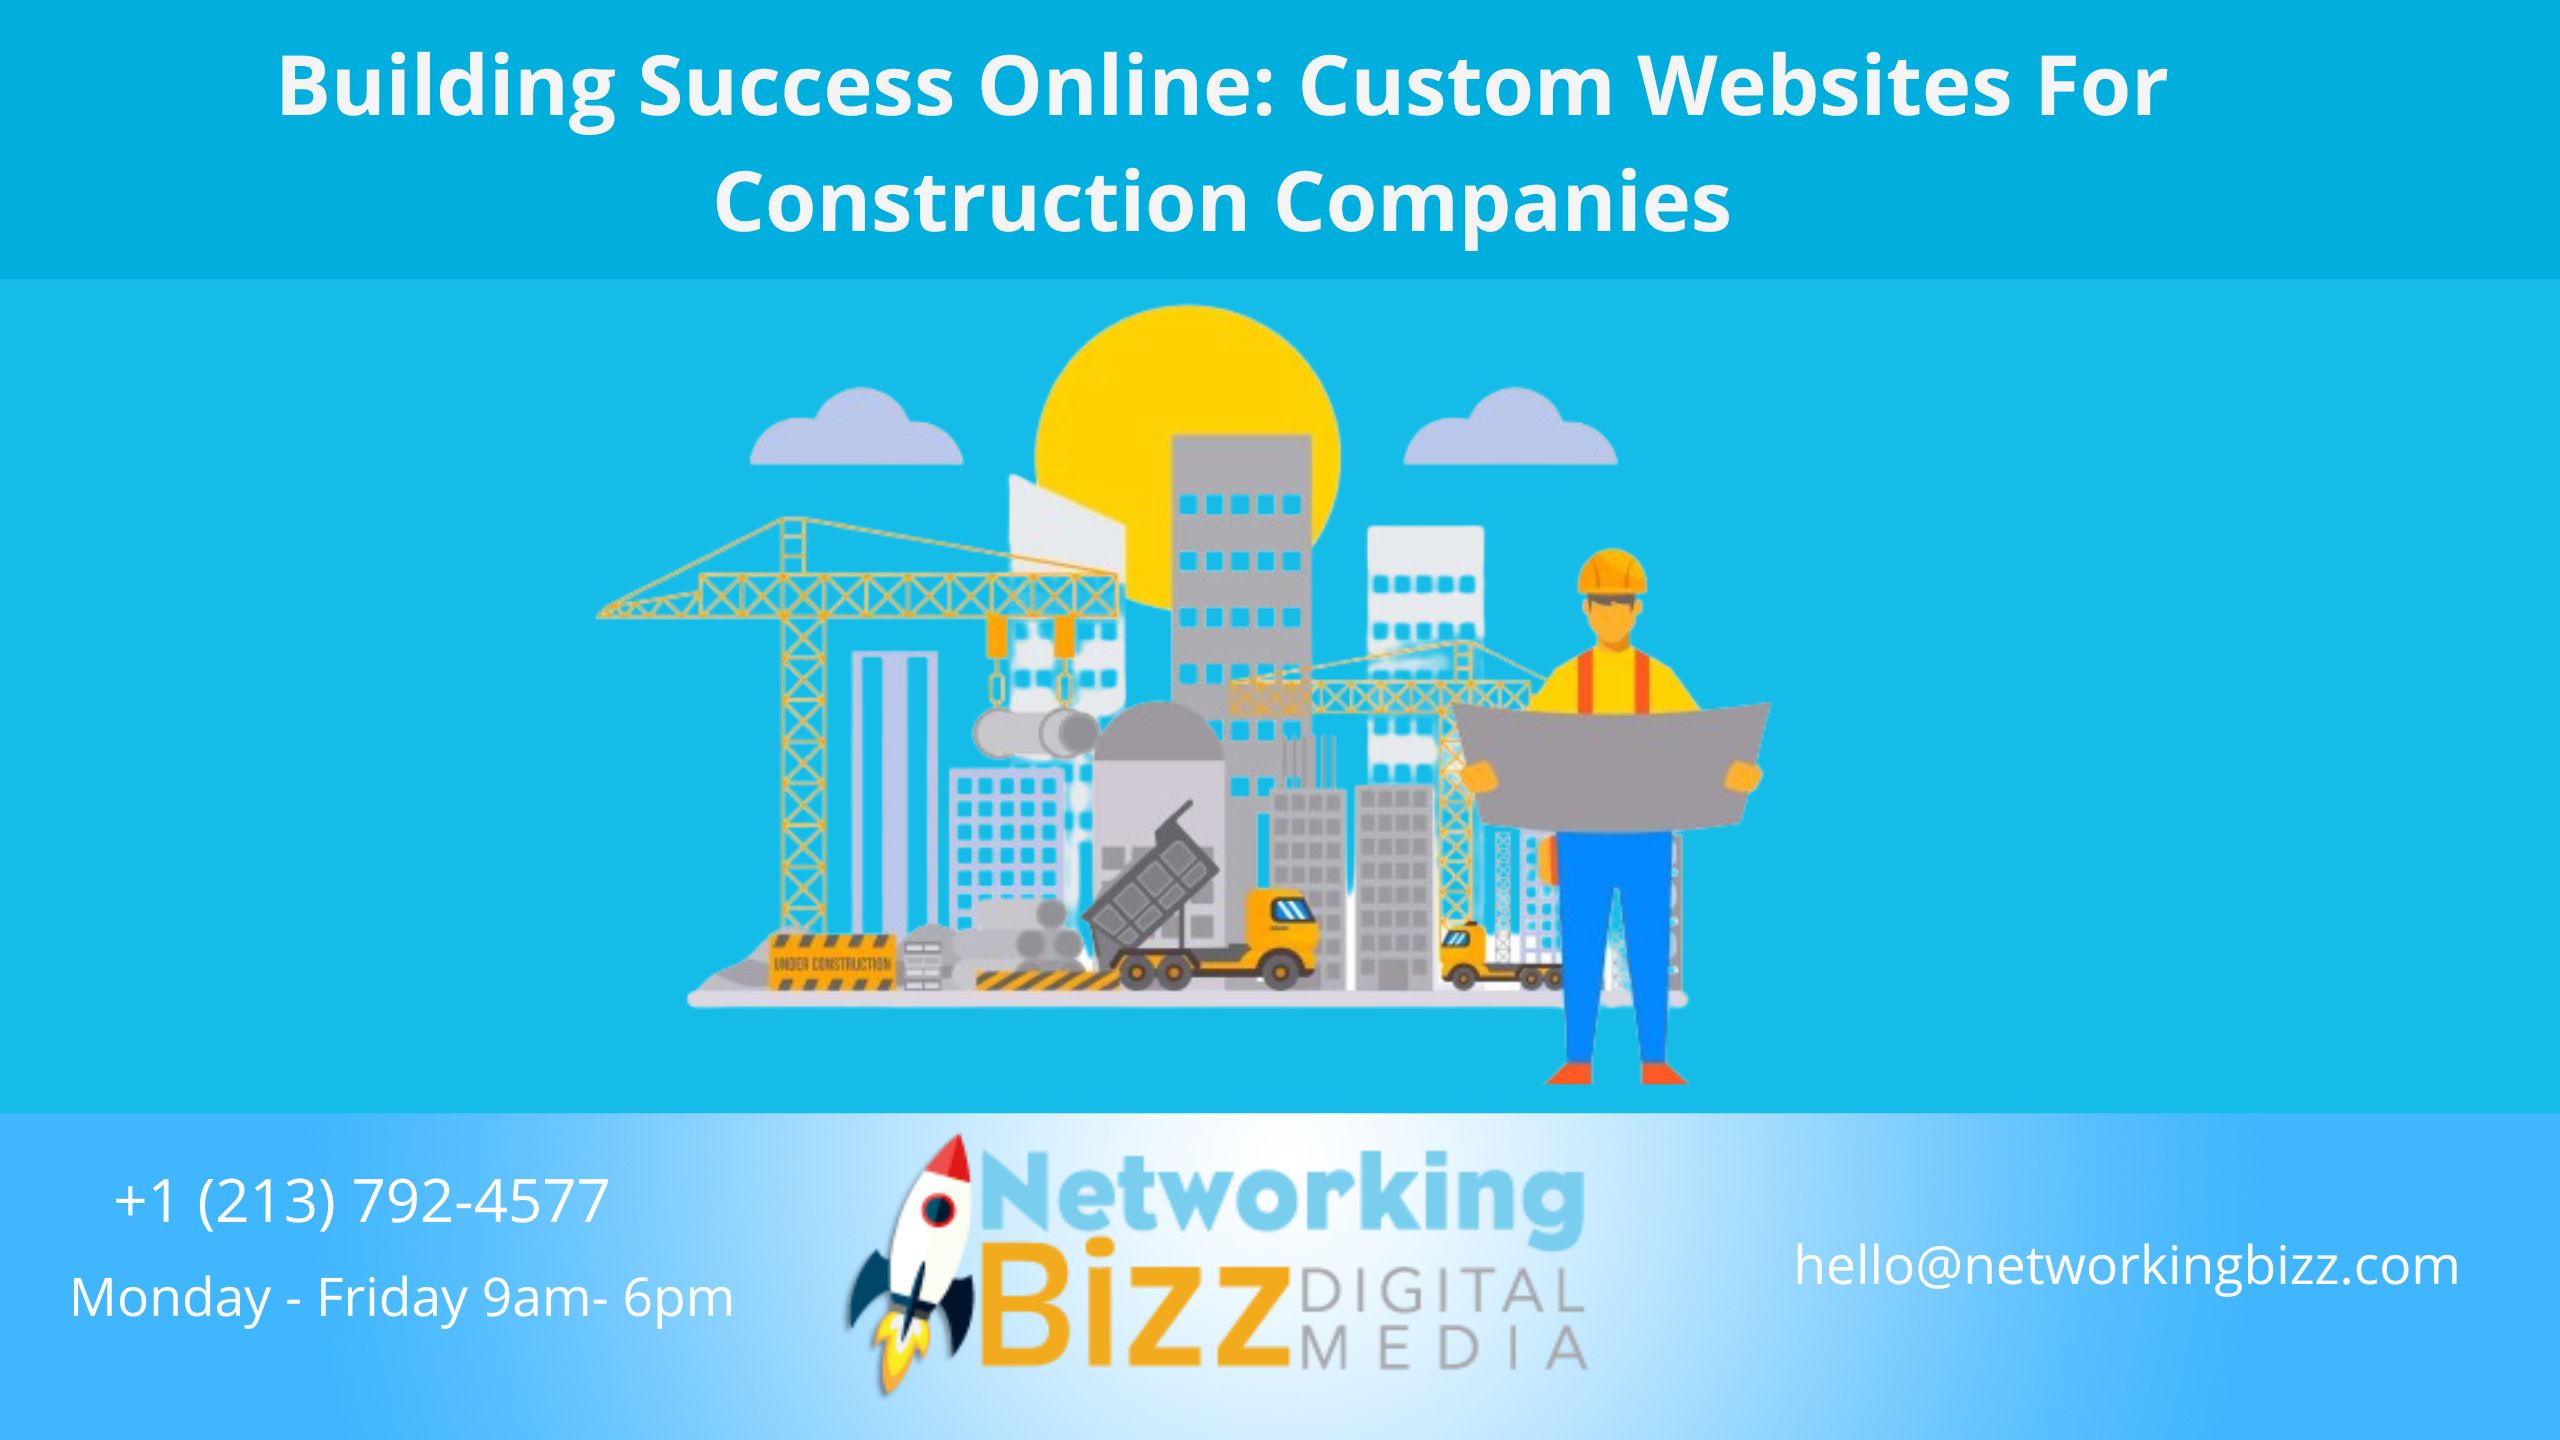 Building Success Online: Custom Websites For Construction Companies